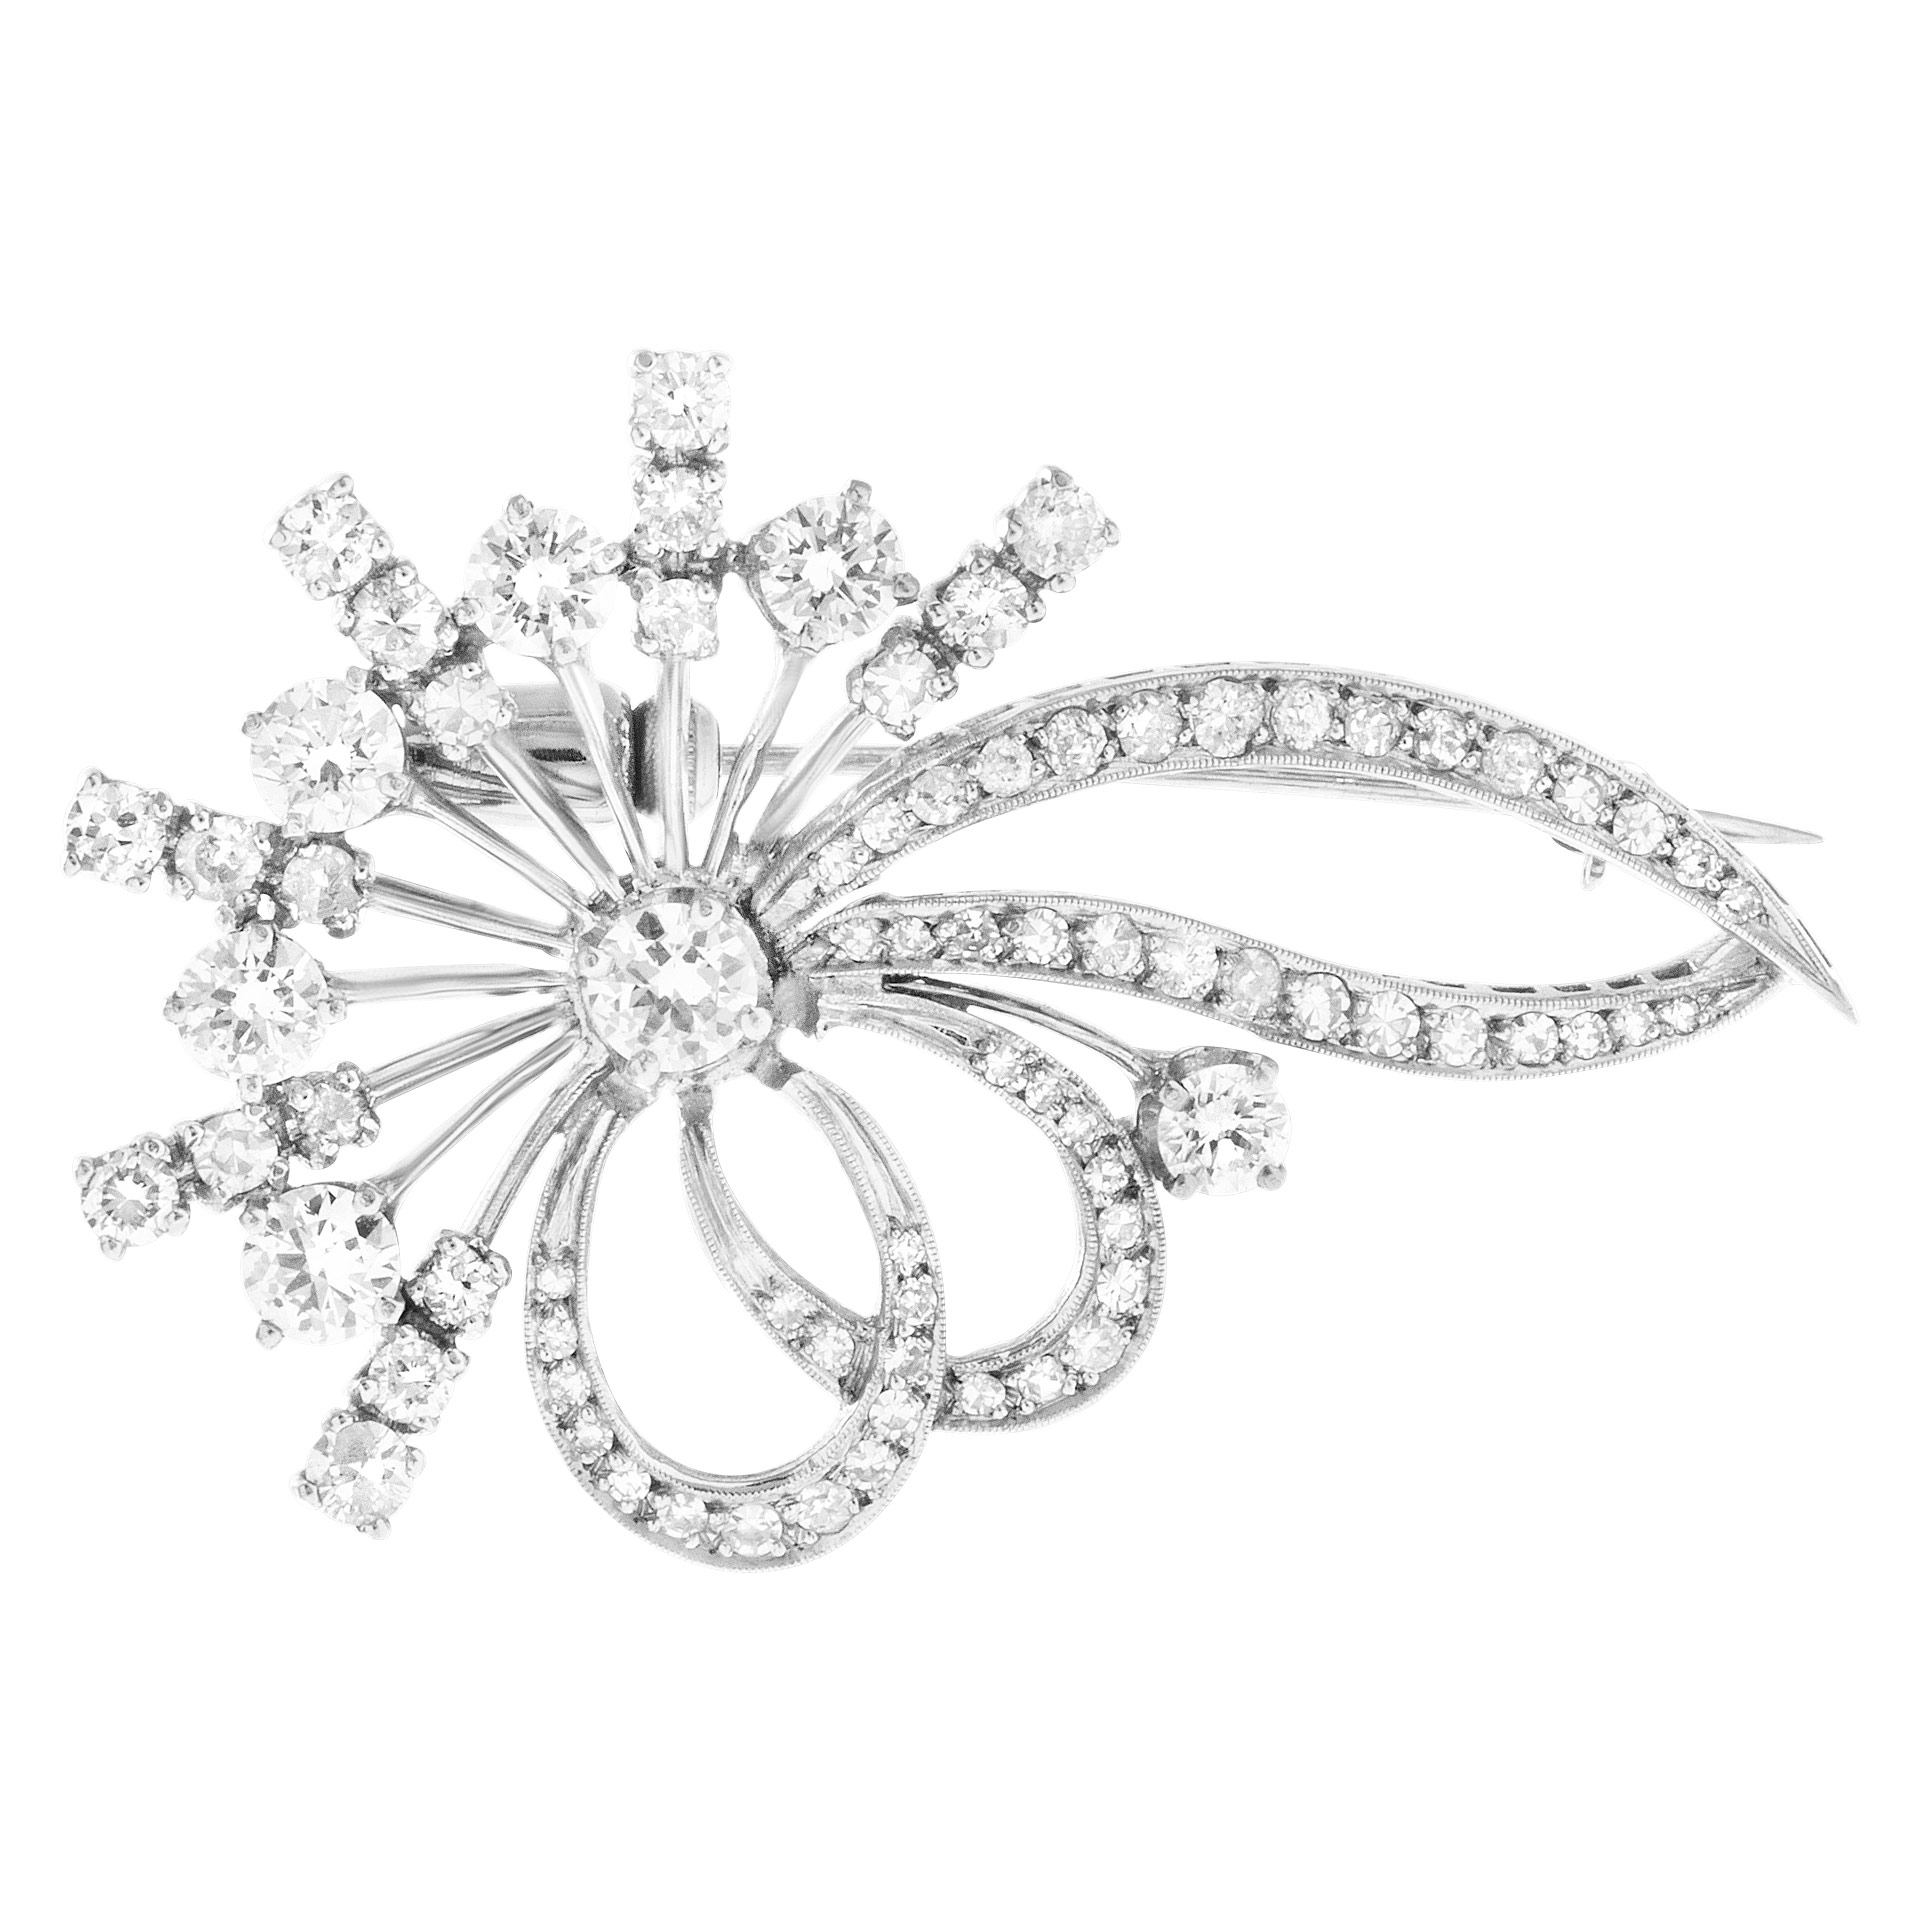 Diamond flower pin/broach in 14k white gold. 3.00 carats in diamonds image 1